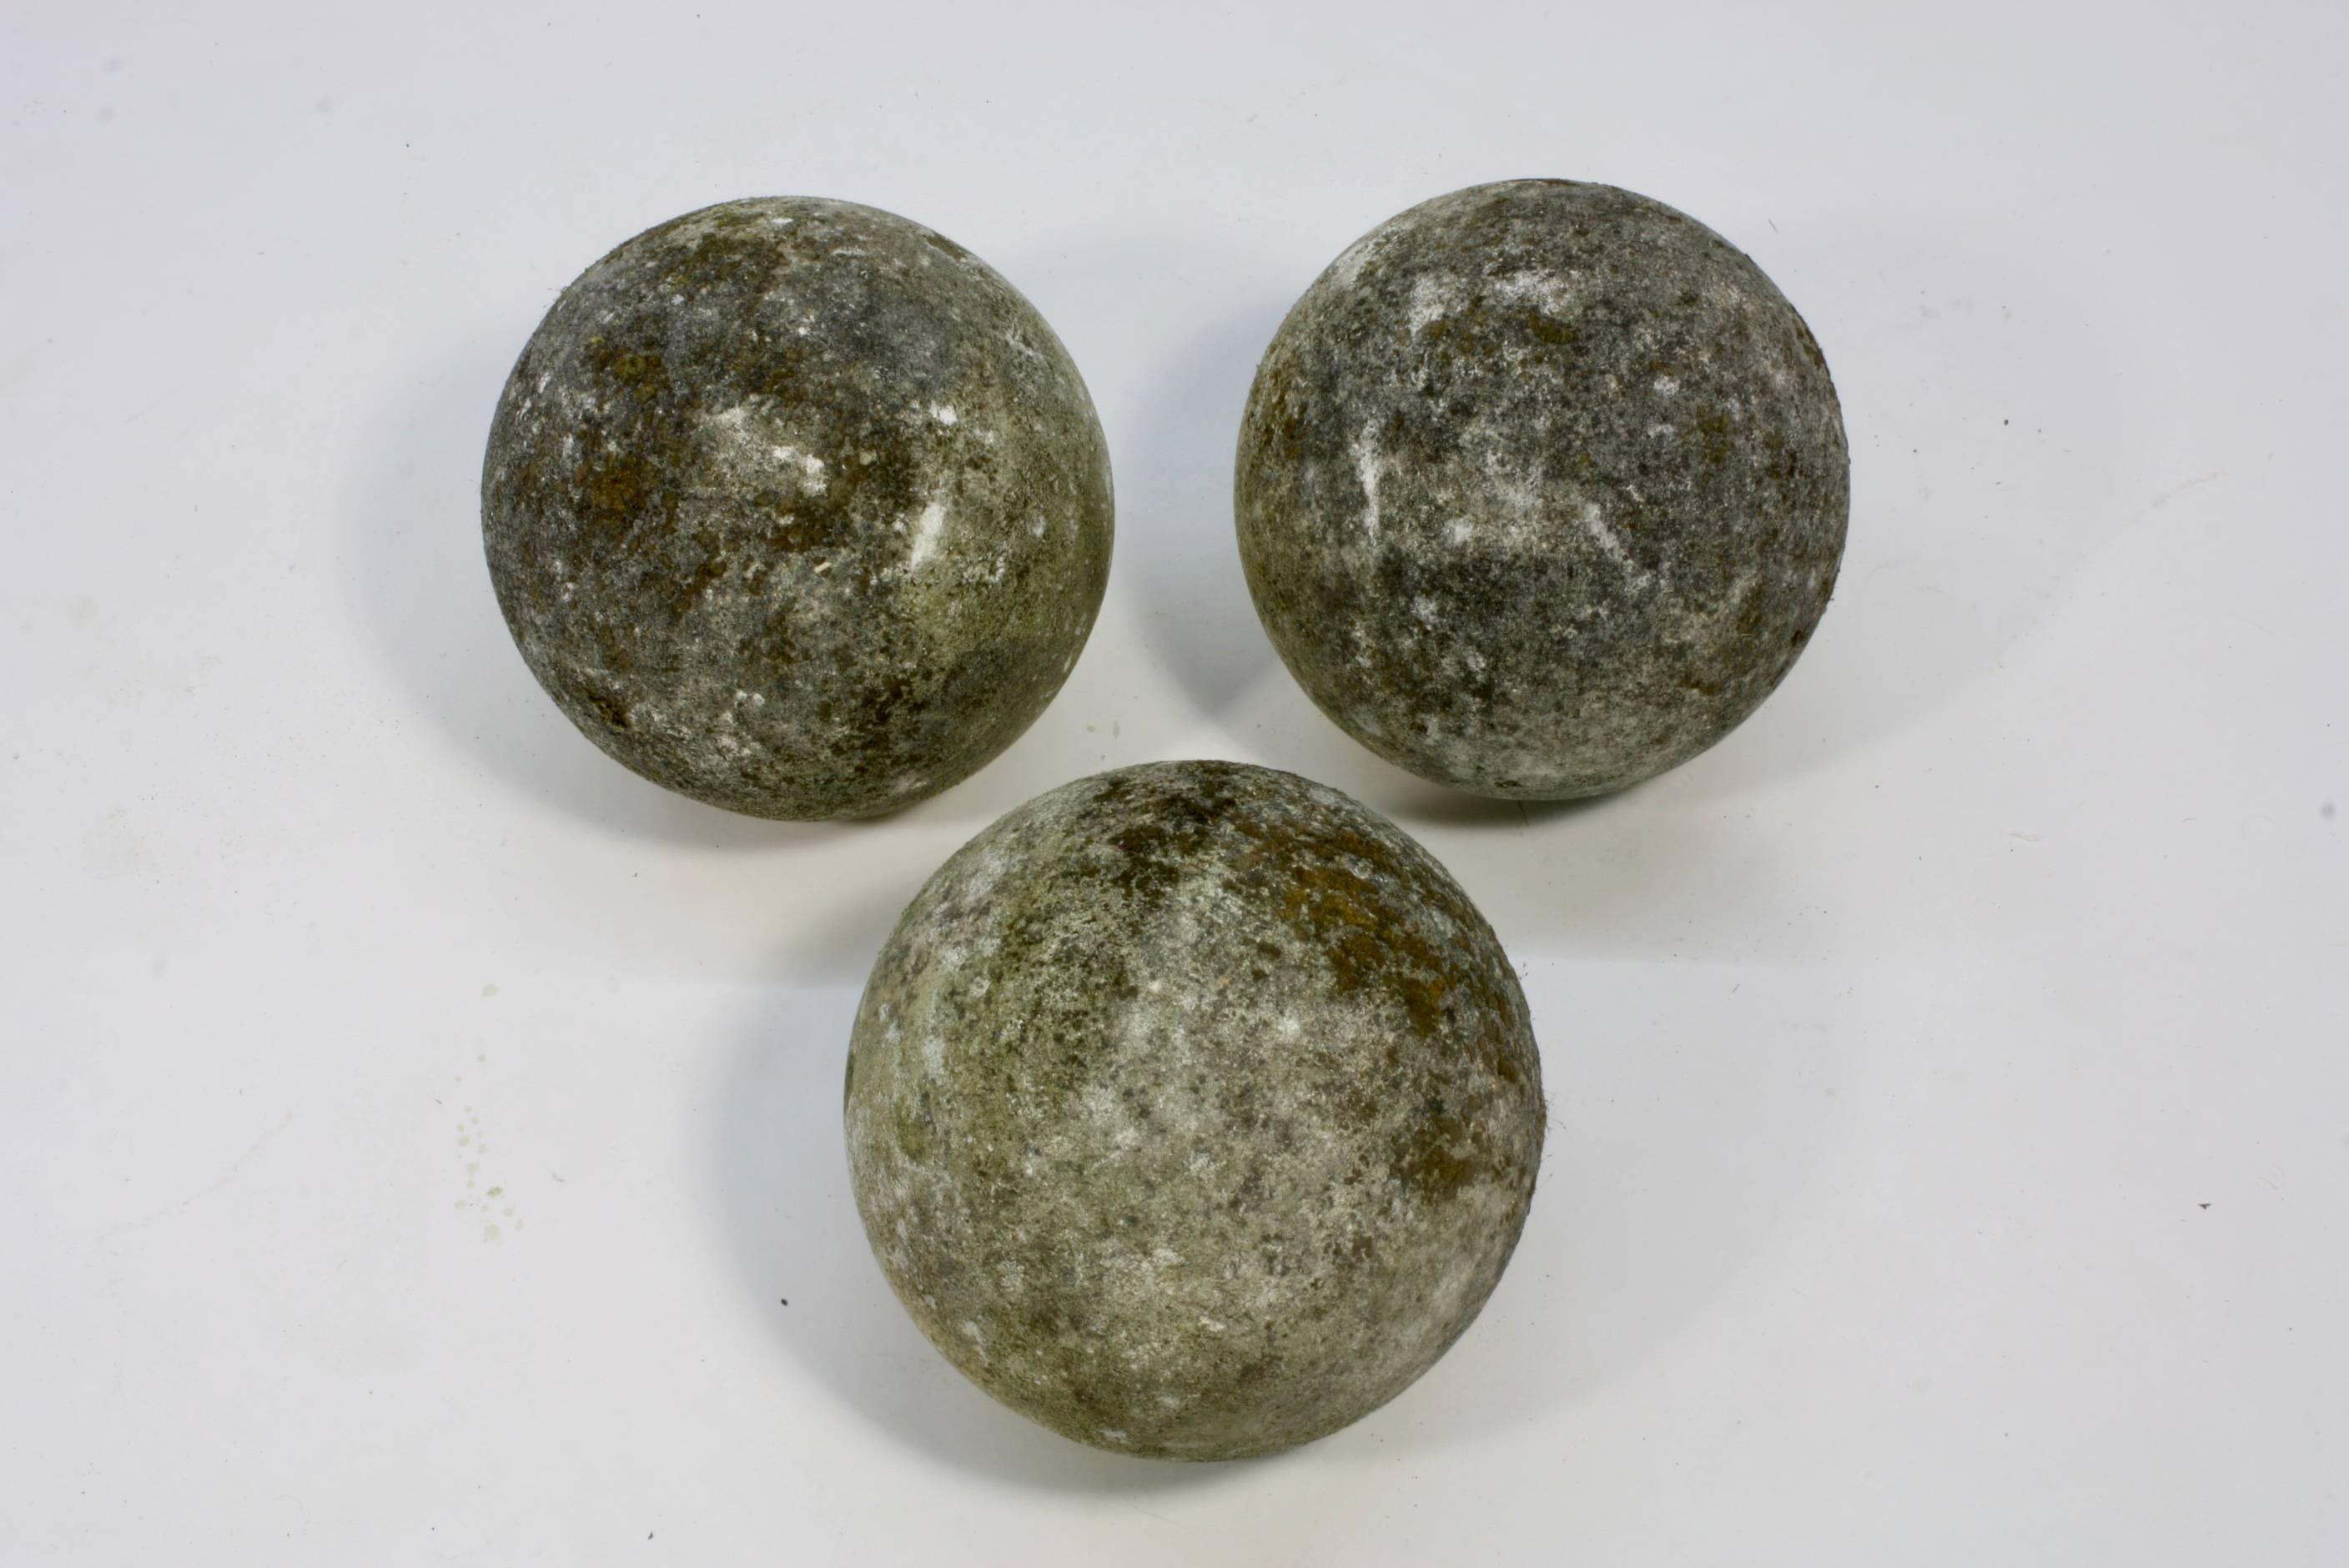 stone garden spheres for sale